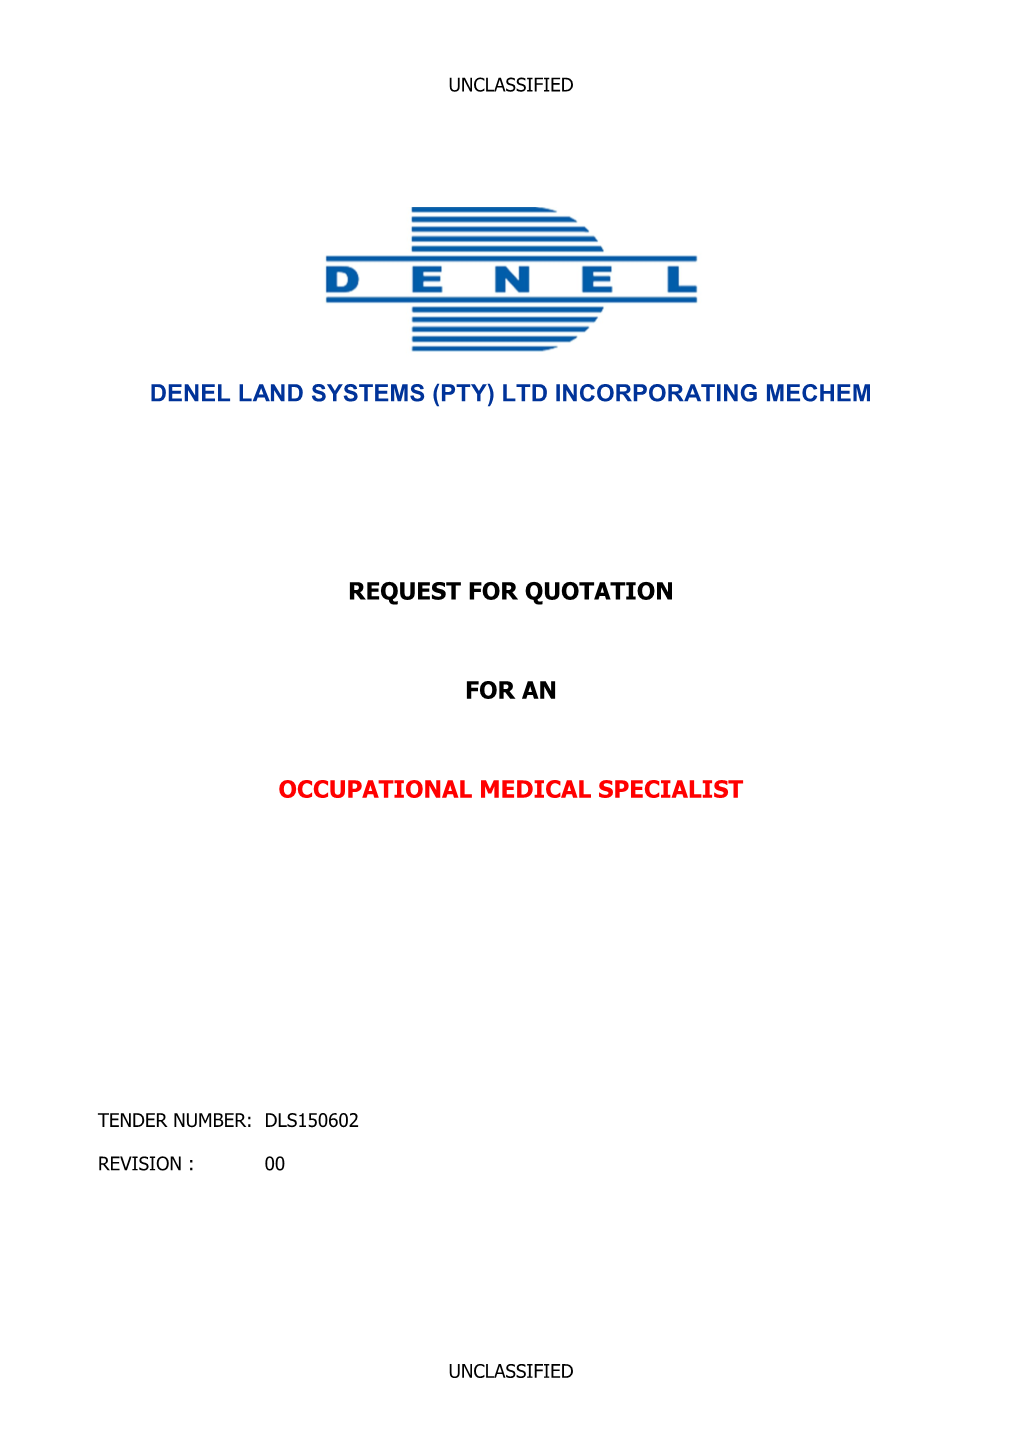 Denel Land Systems (Pty) Ltd Incorporating Mechem